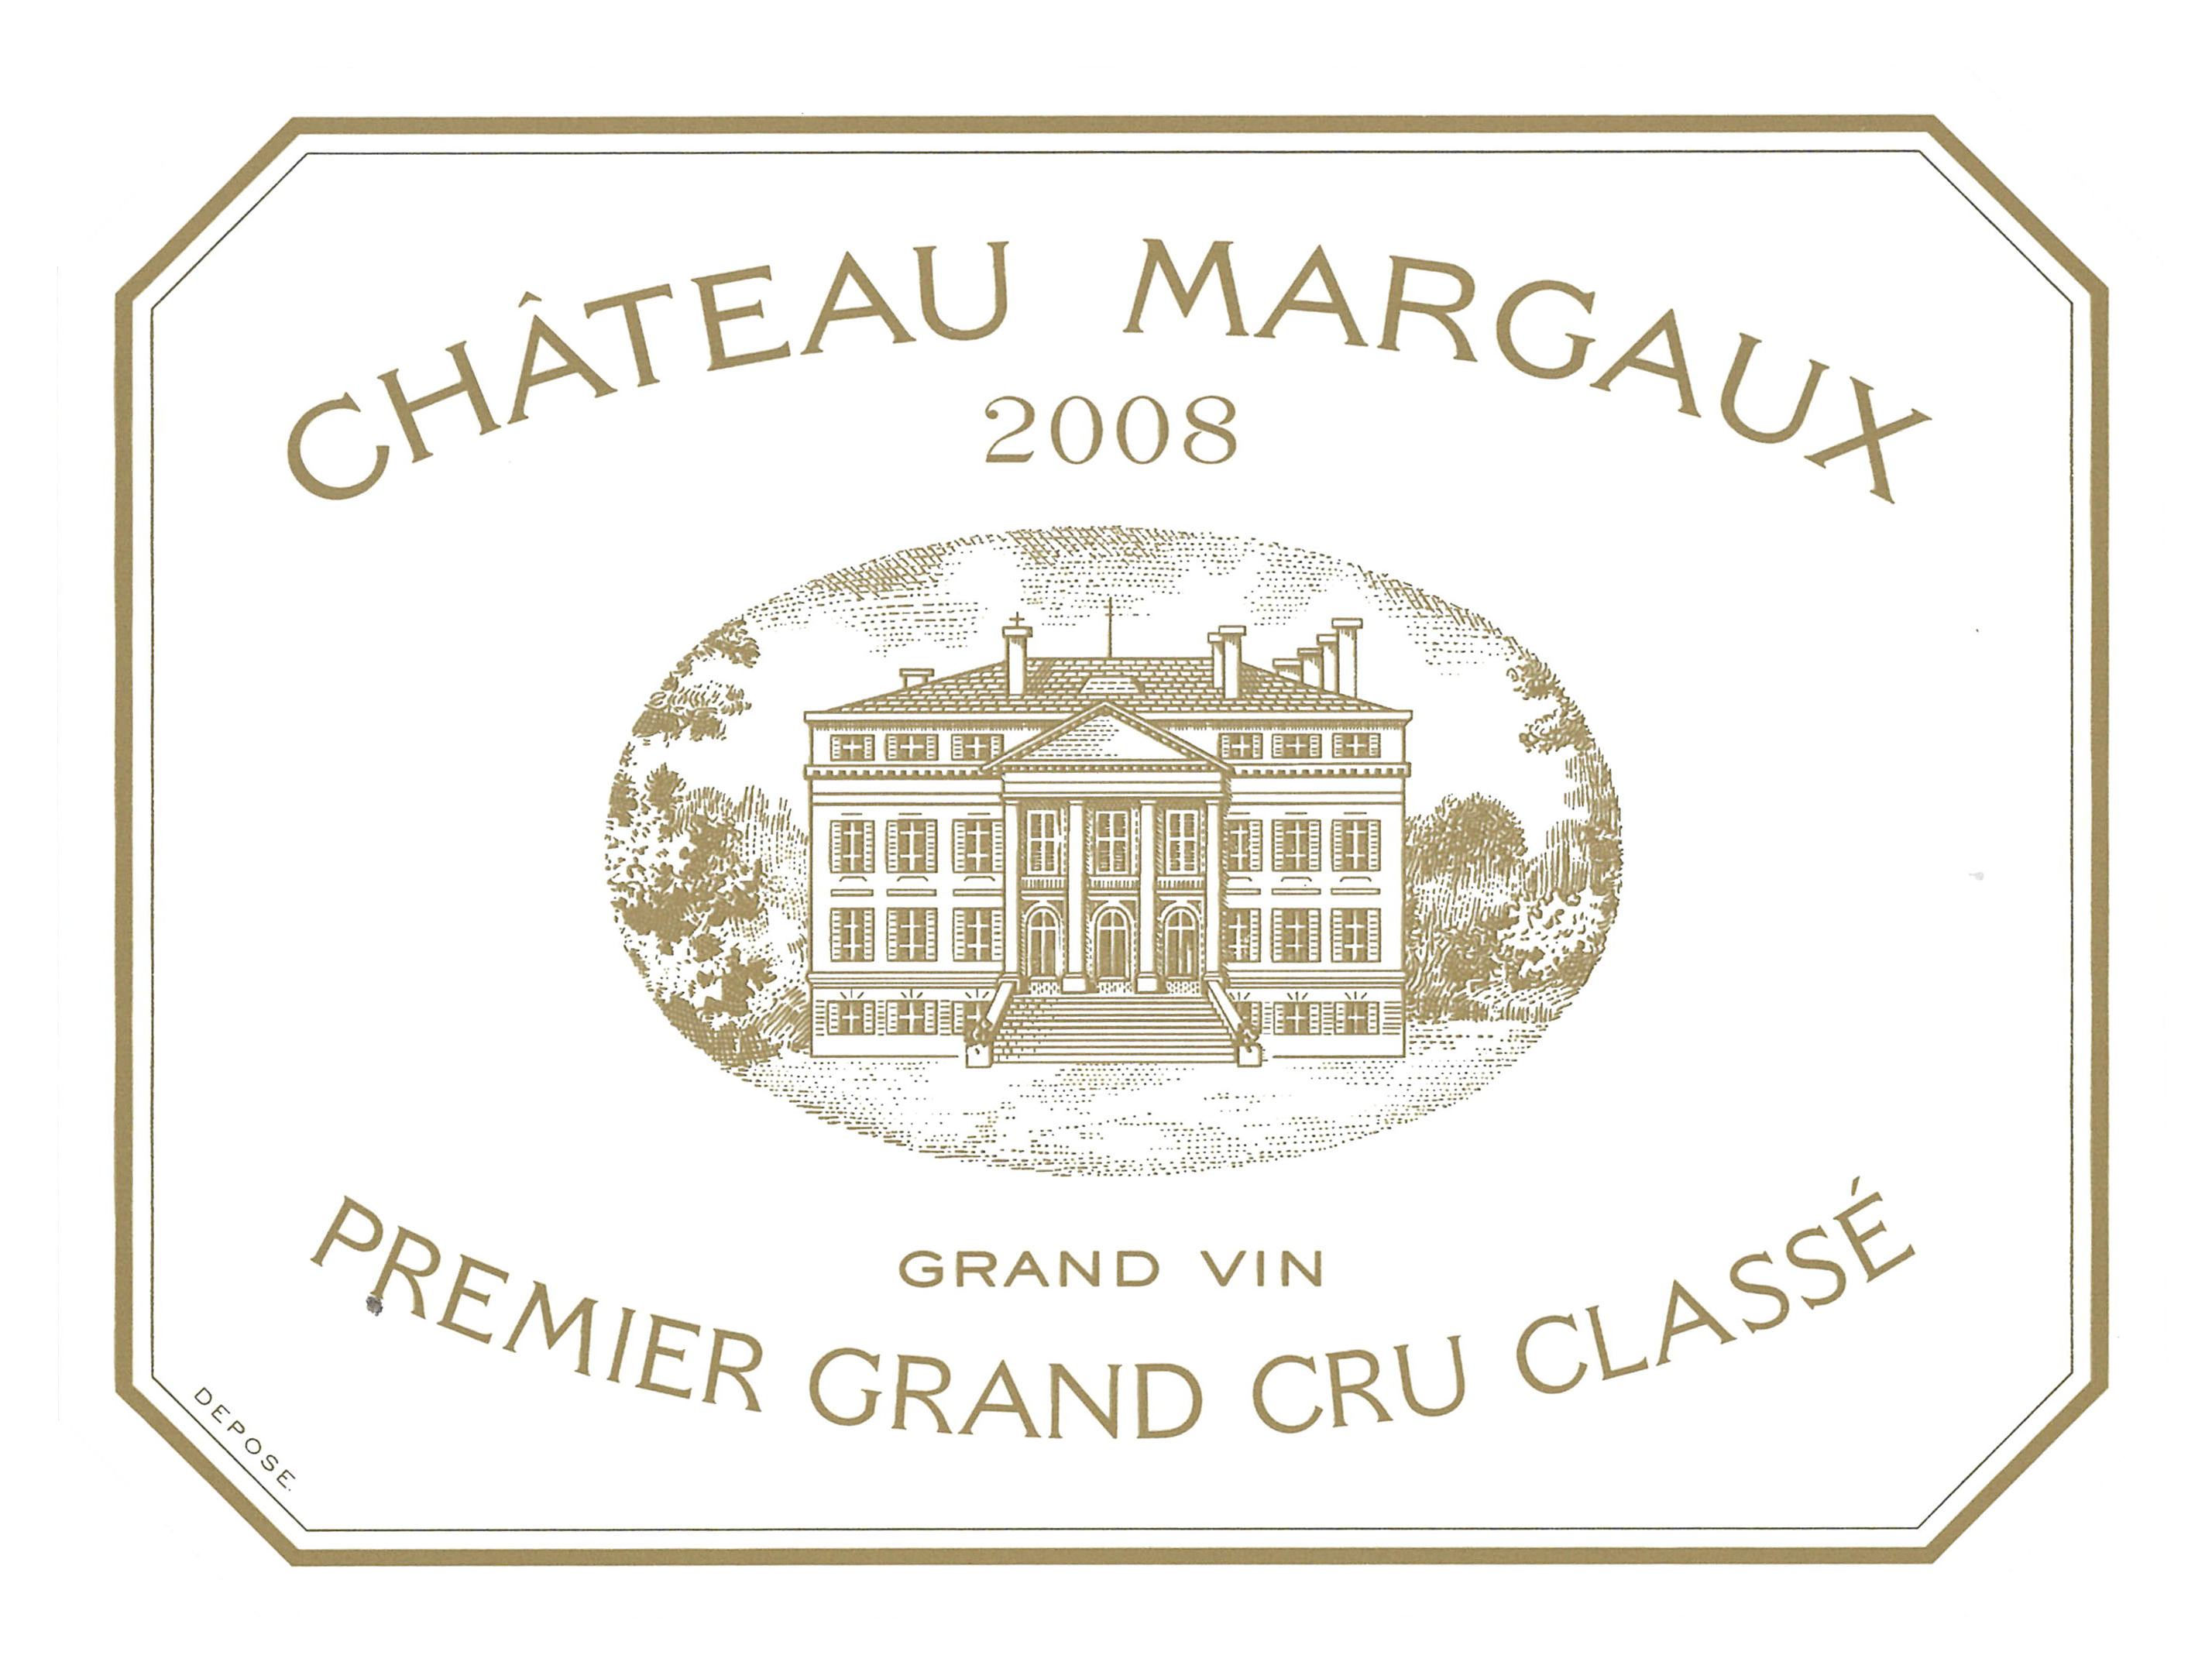 Château Margaux 2008 The Wine Gate Shop